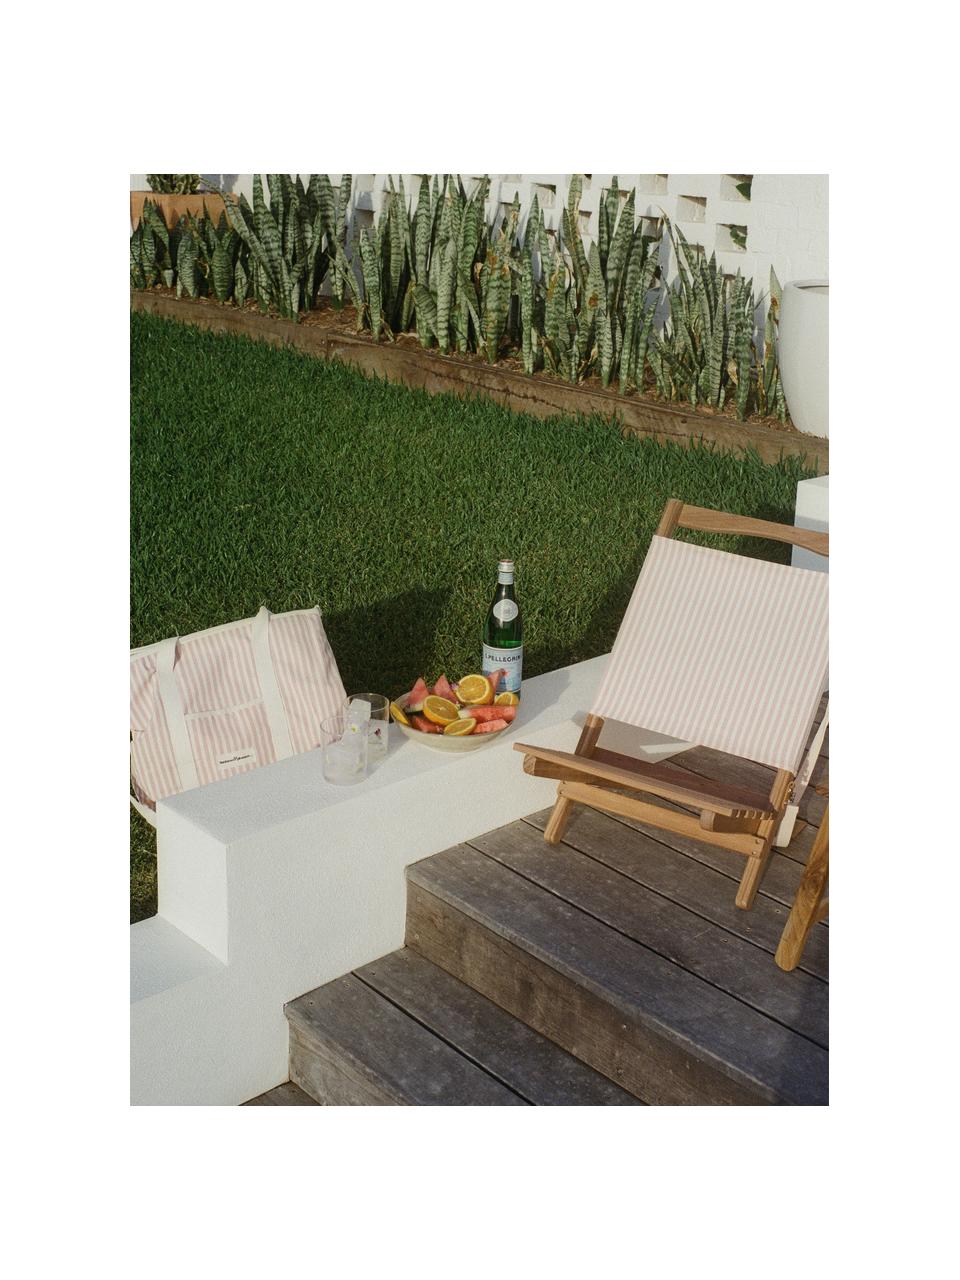 Inklapbare ligstoel Lauren's, Frame: hout, Roze, wit, B 41 x H 58 cm